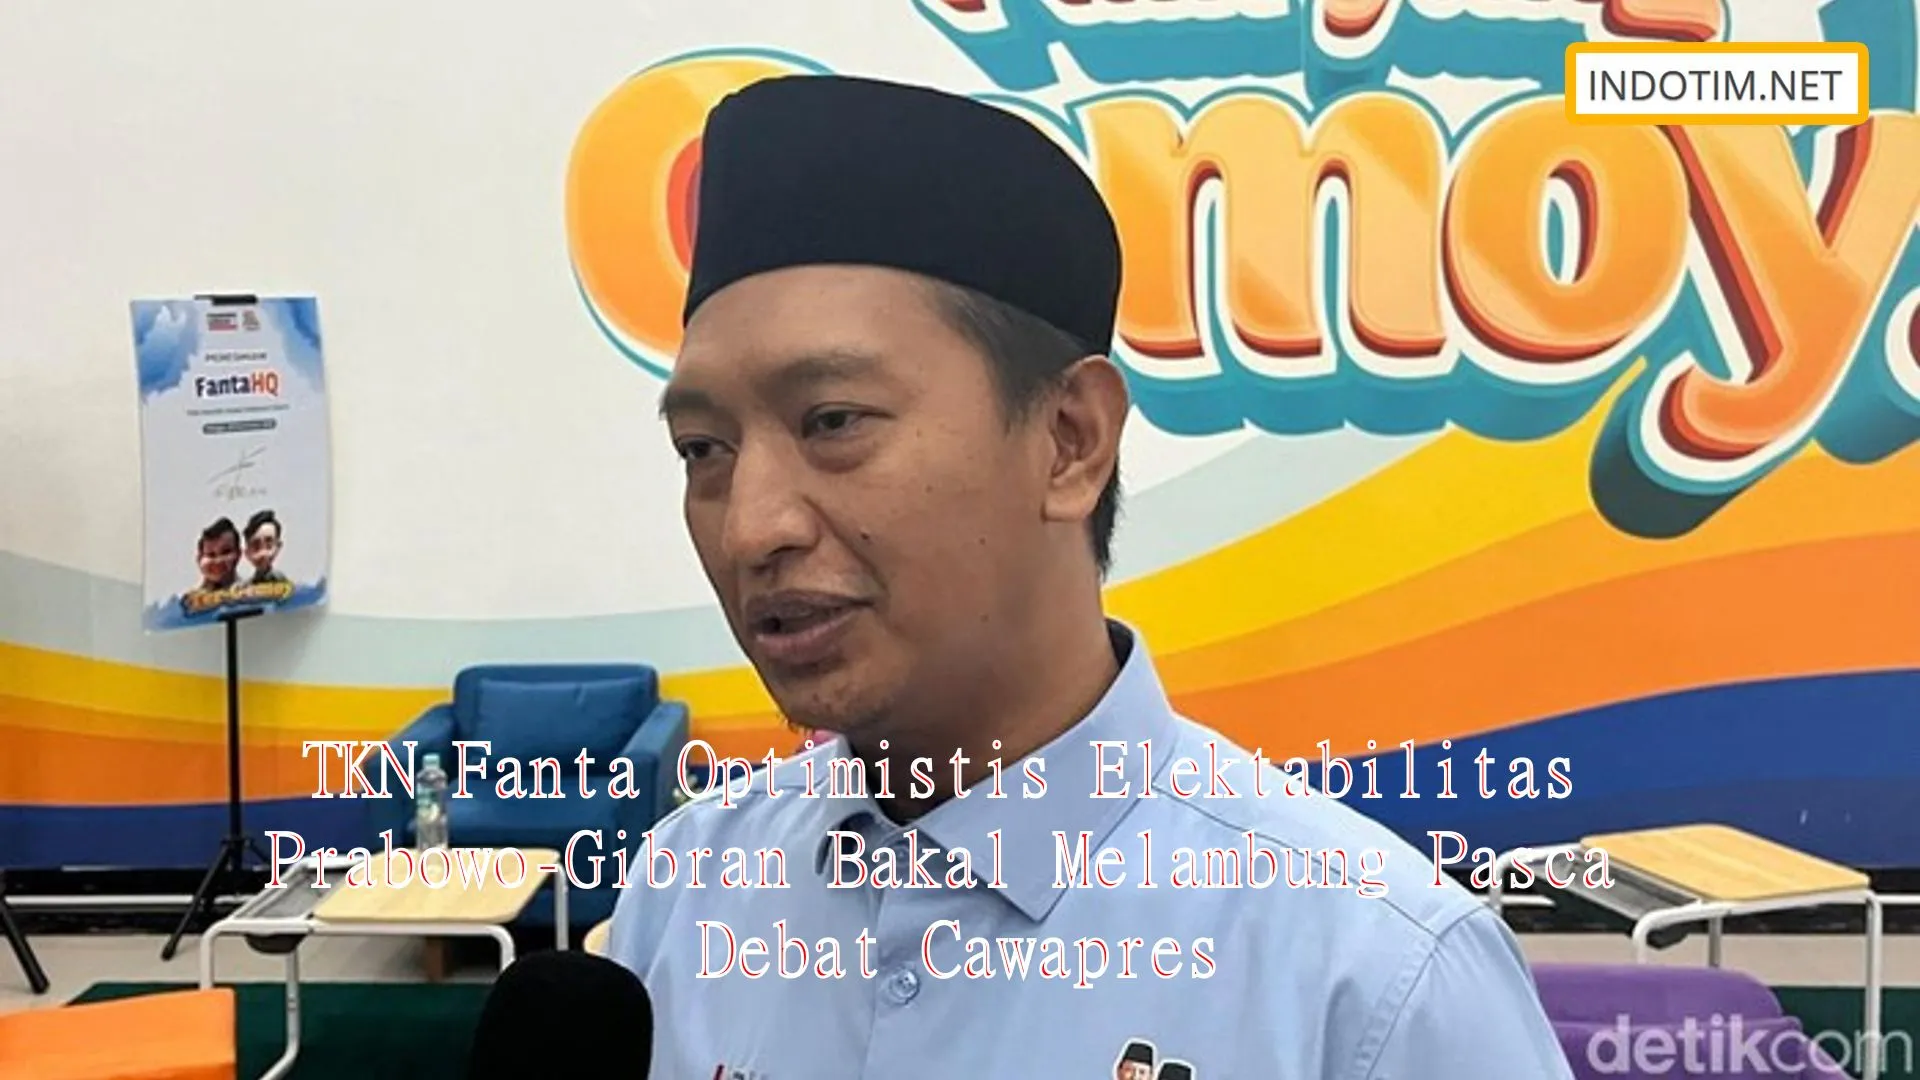 TKN Fanta Optimistis Elektabilitas Prabowo-Gibran Bakal Melambung Pasca Debat Cawapres